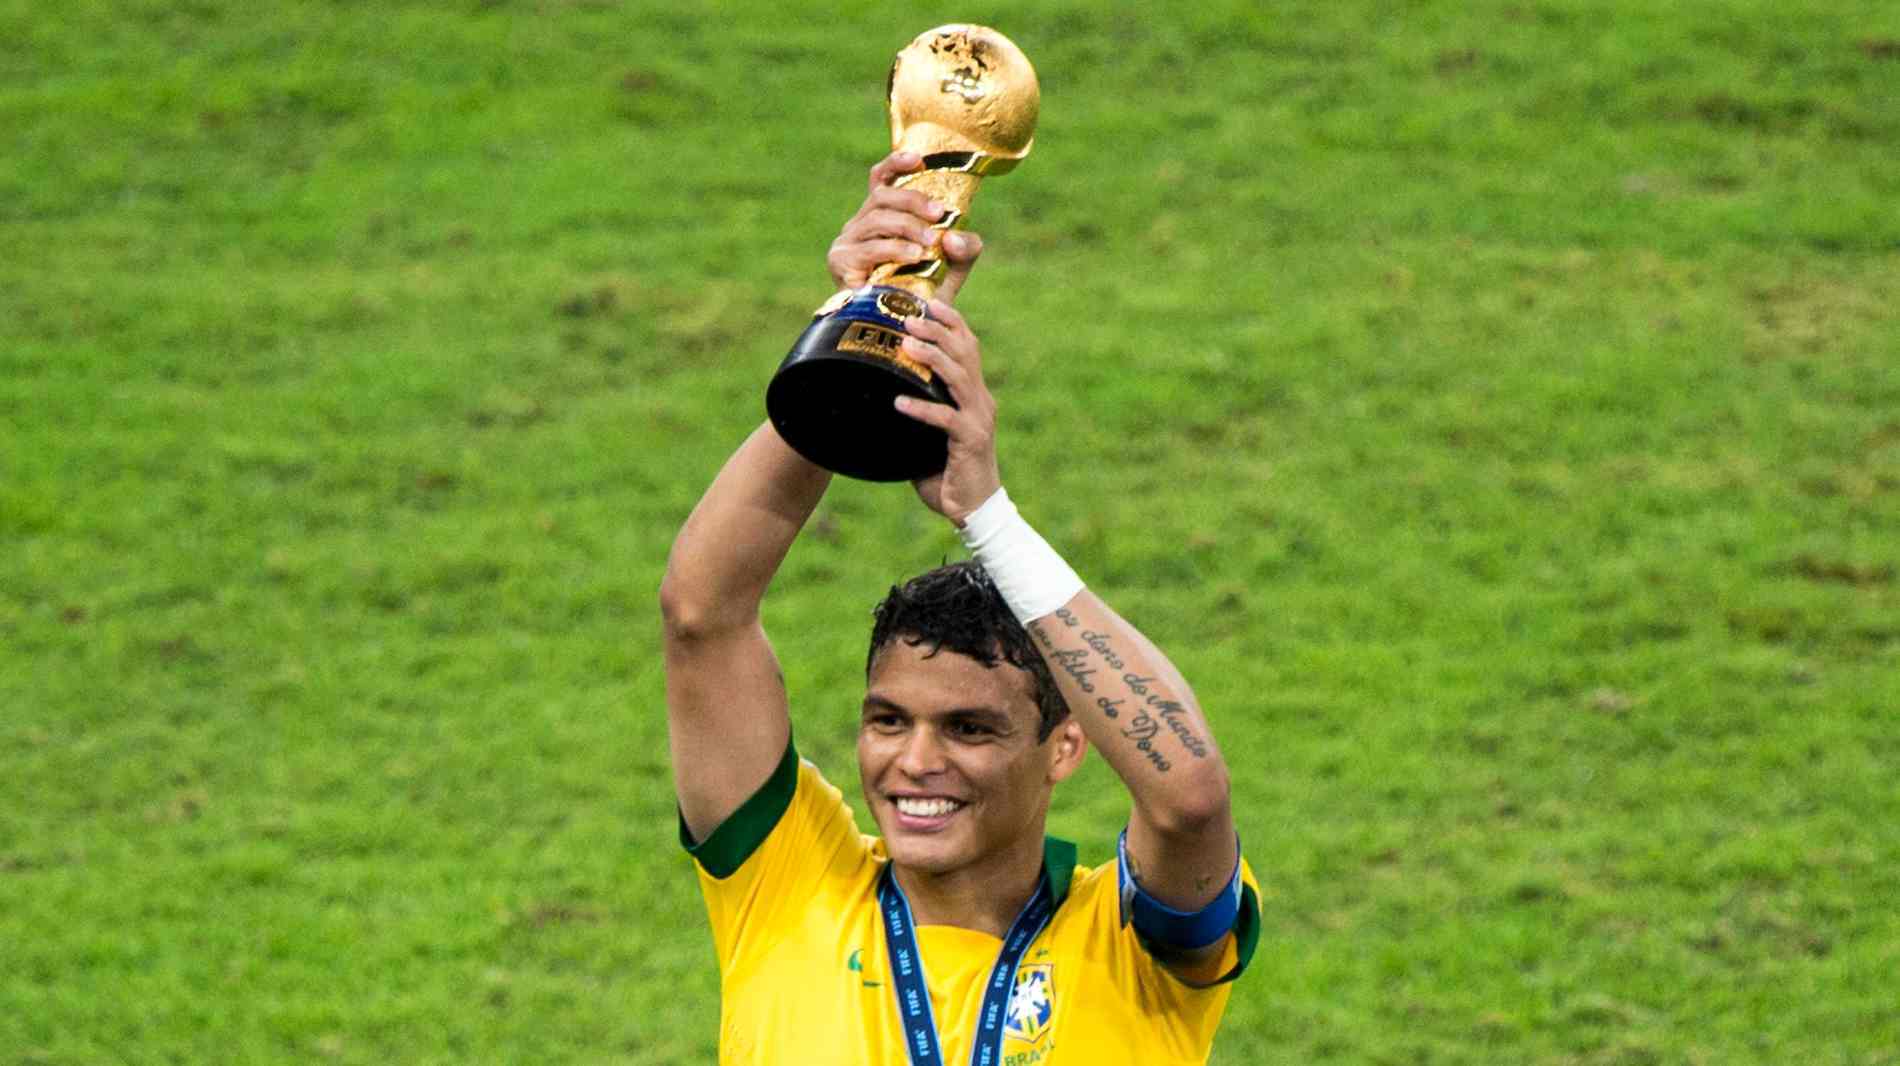 Download Thiago Silva Football Soccer Best Player Award Mobile Desktop Background Hd Free Images